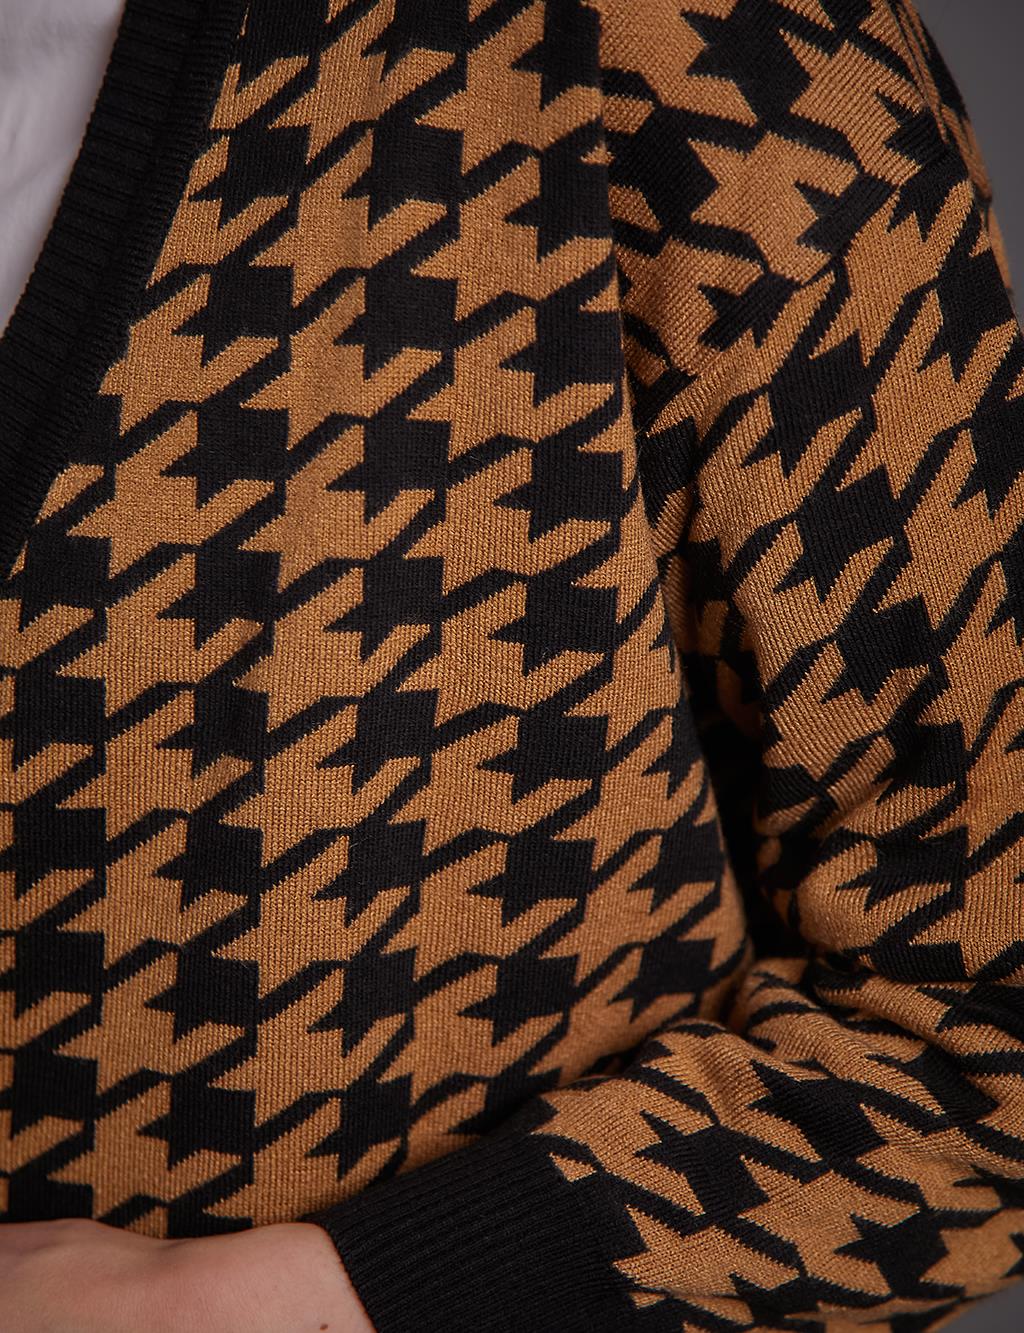 Large Houndstooth Pattern Cardigan Black Beige